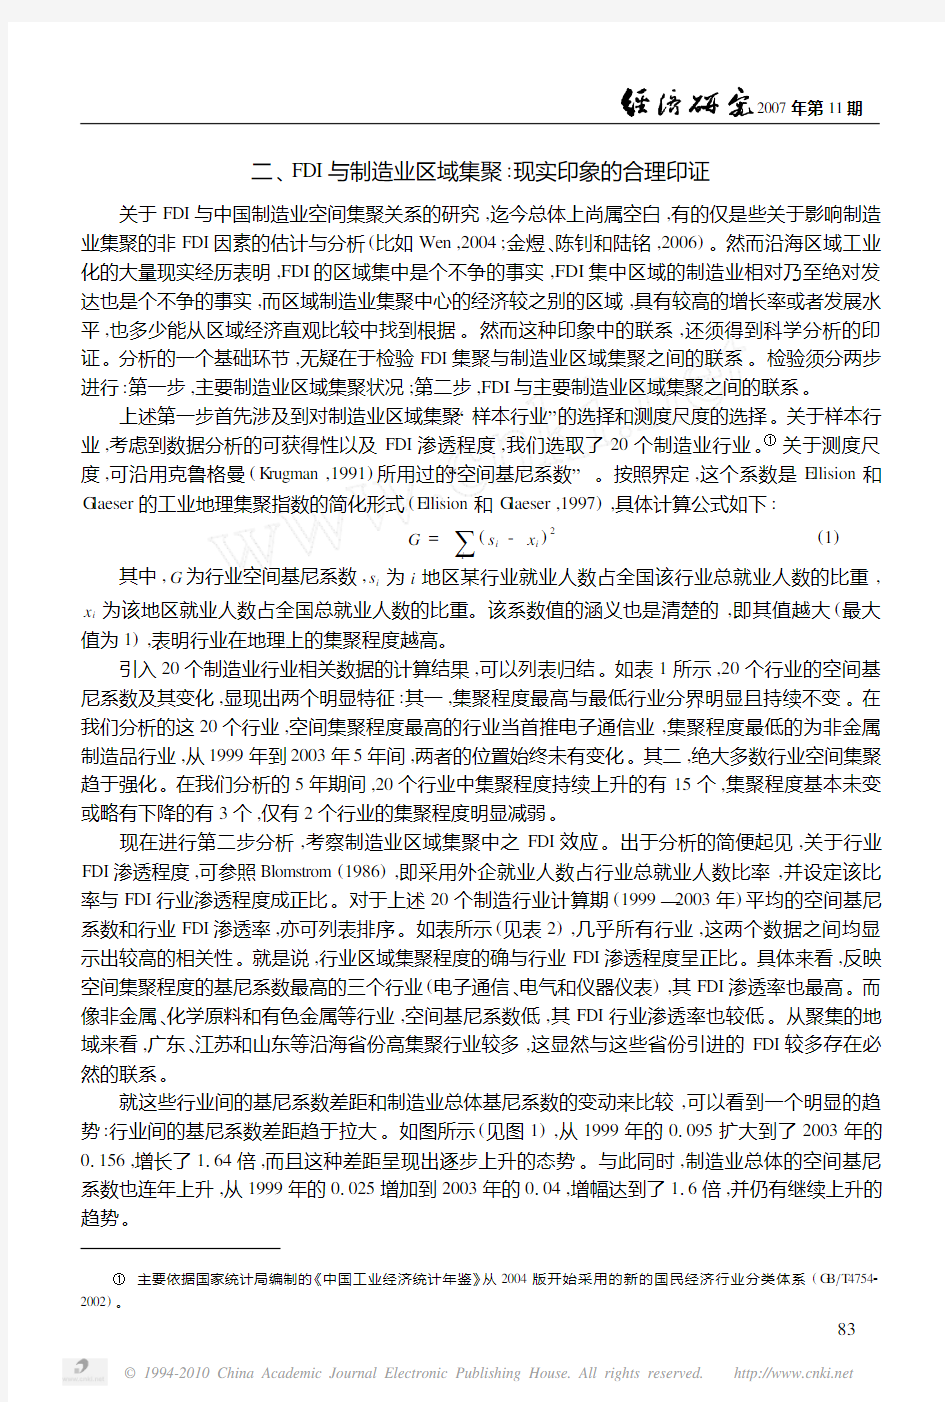 FDI与中国制造业区域集聚_基于20个行业的实证分析_赵伟